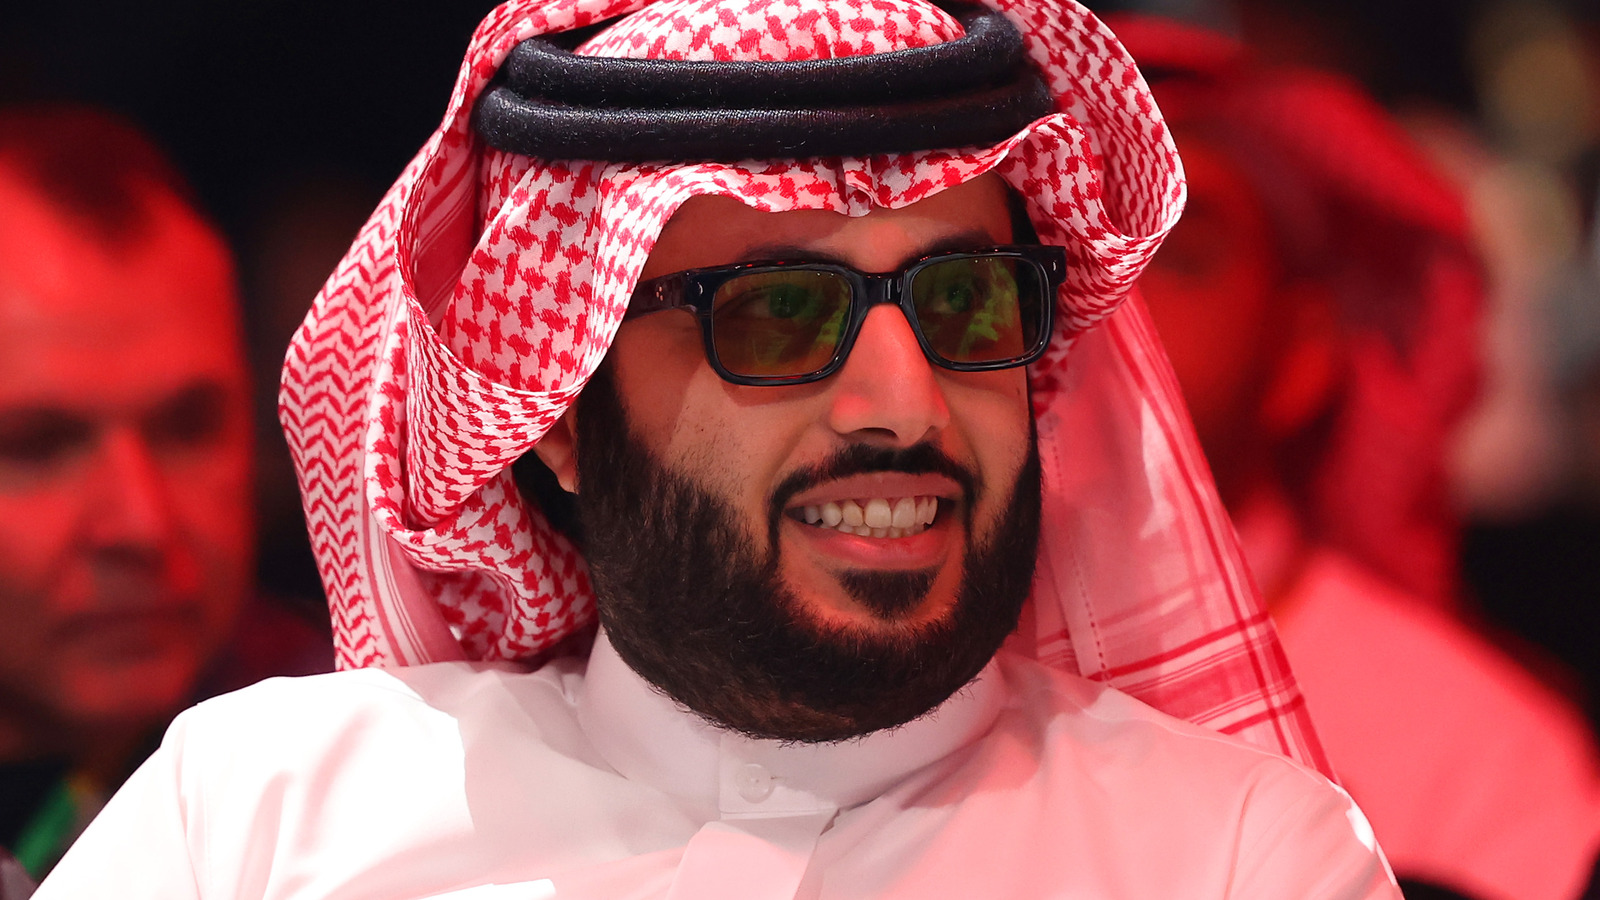 Saudi Arabia GEA In Negotiations To Host Royal Rumble Or WrestleMania In 2026 Or 2027